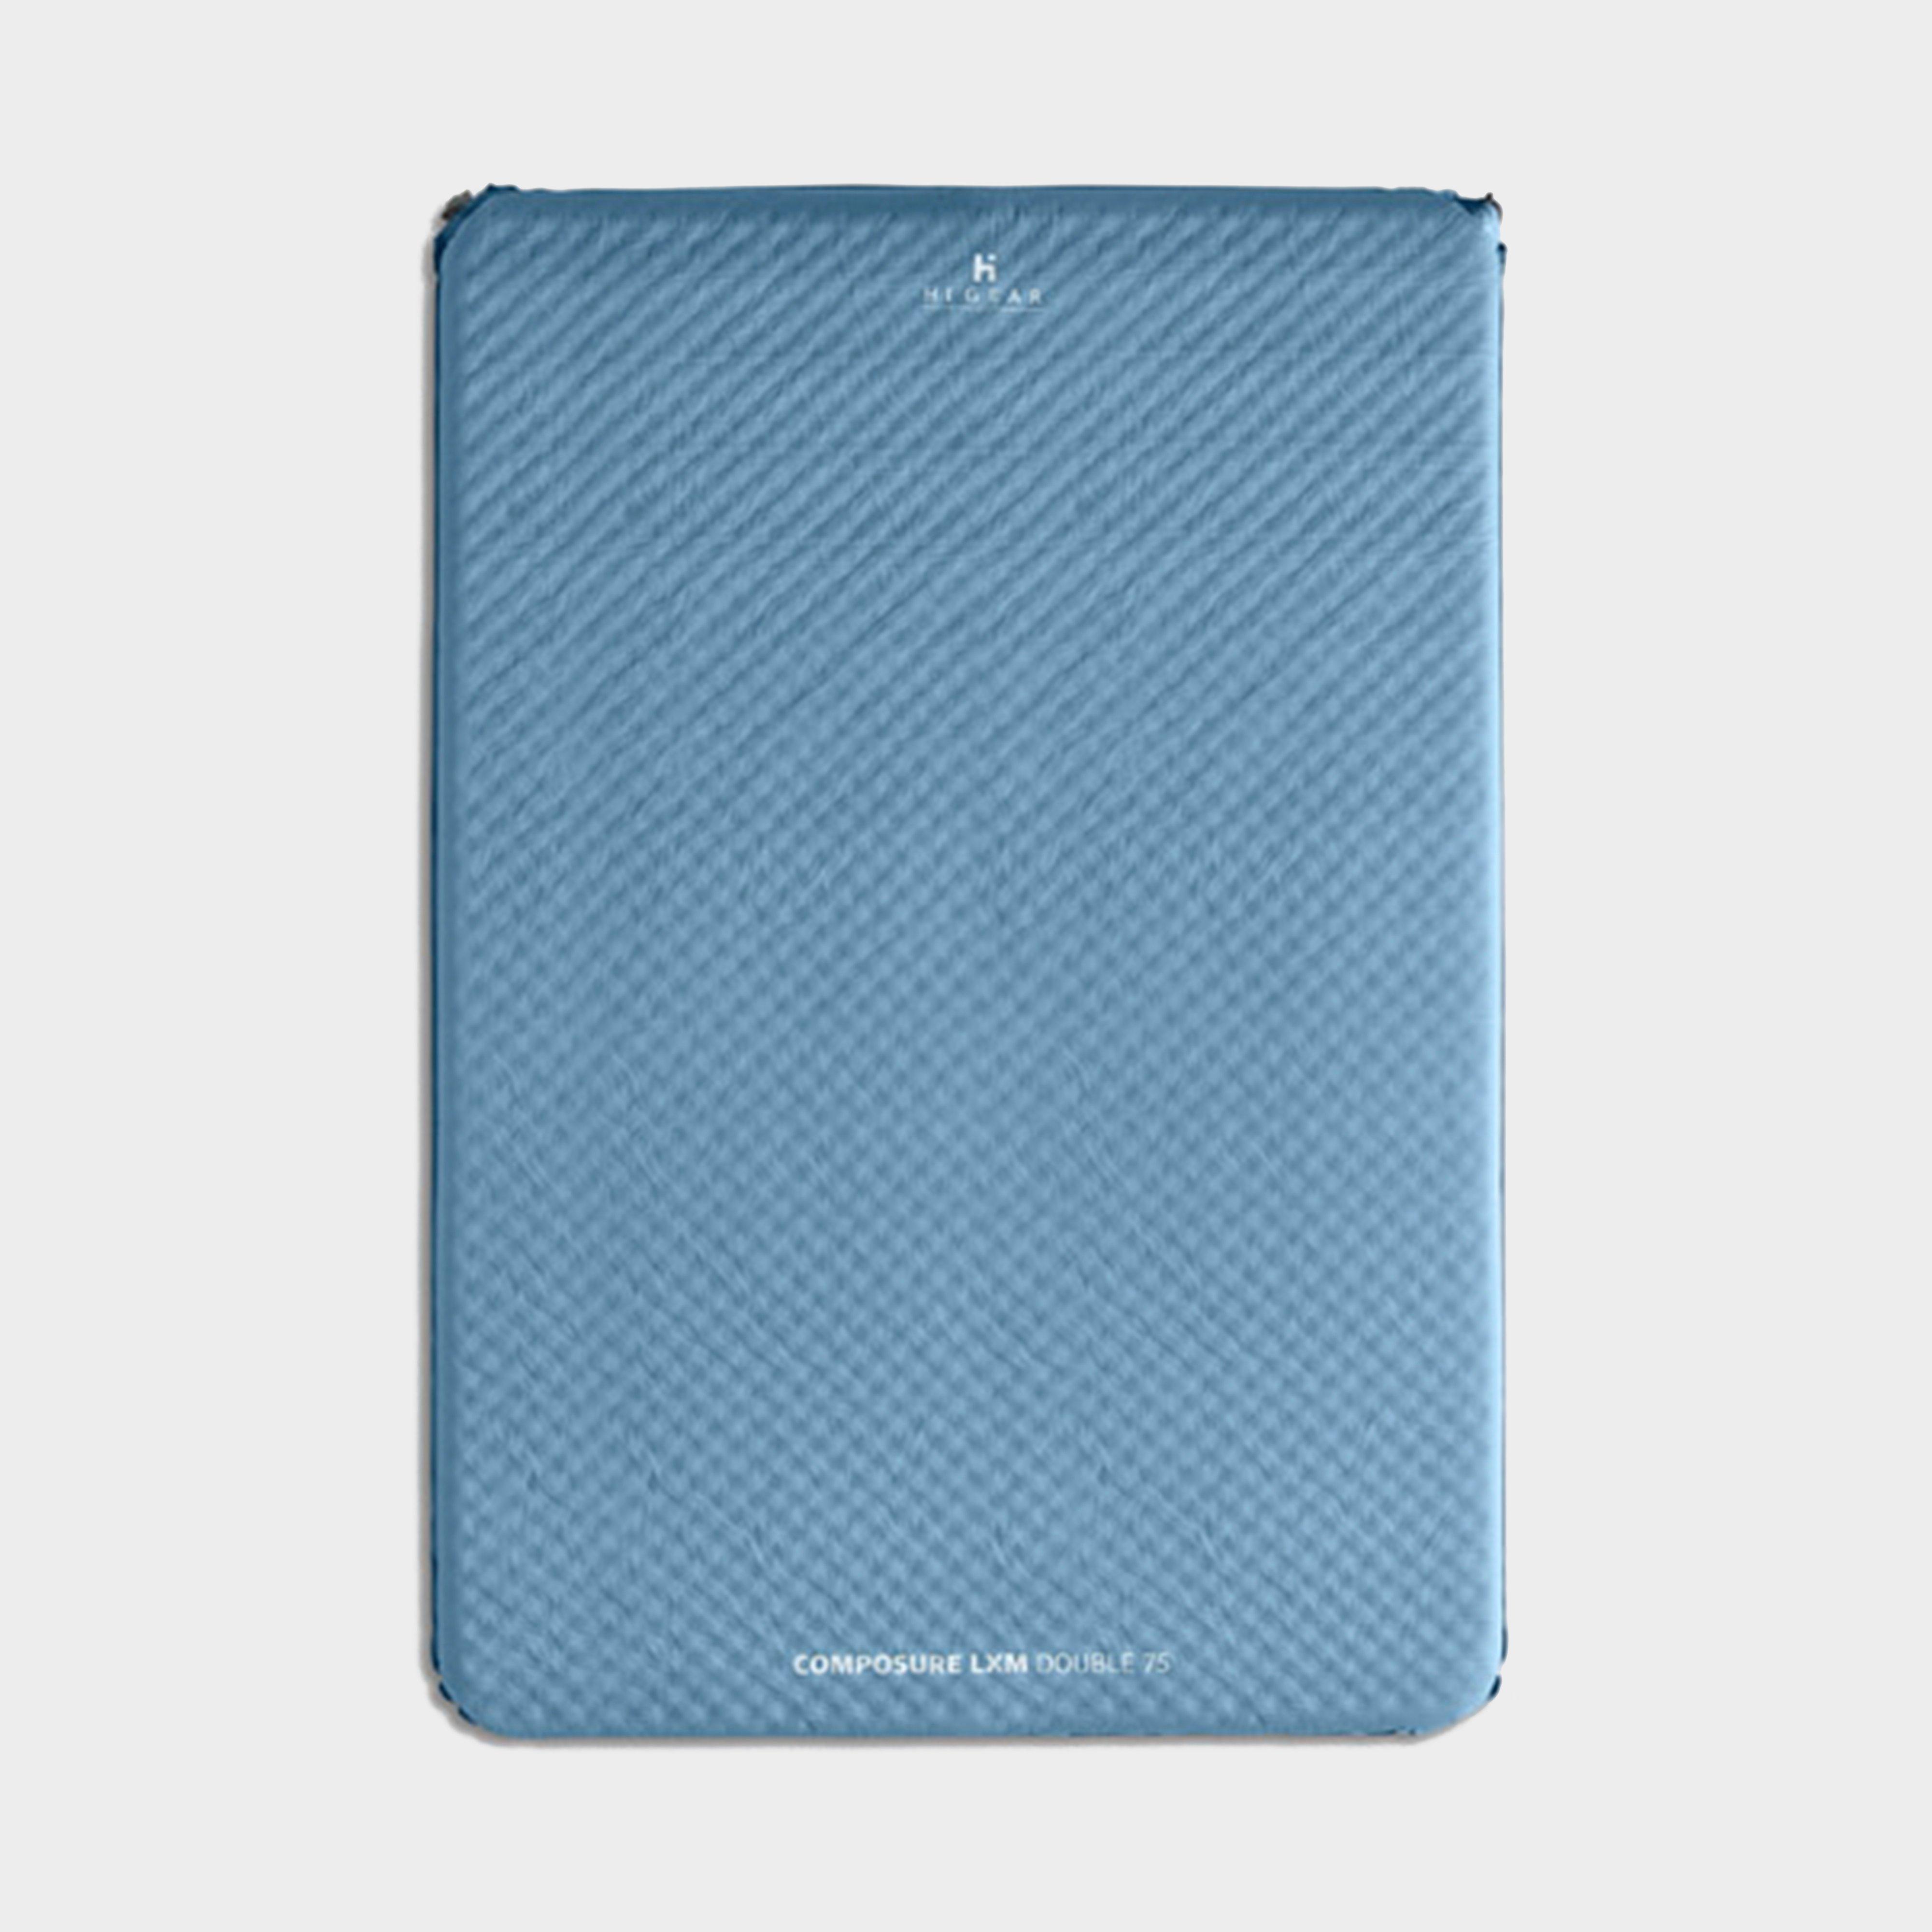  HI-GEAR Composure LXM 7.5 Double Sleeping Mat, Blue